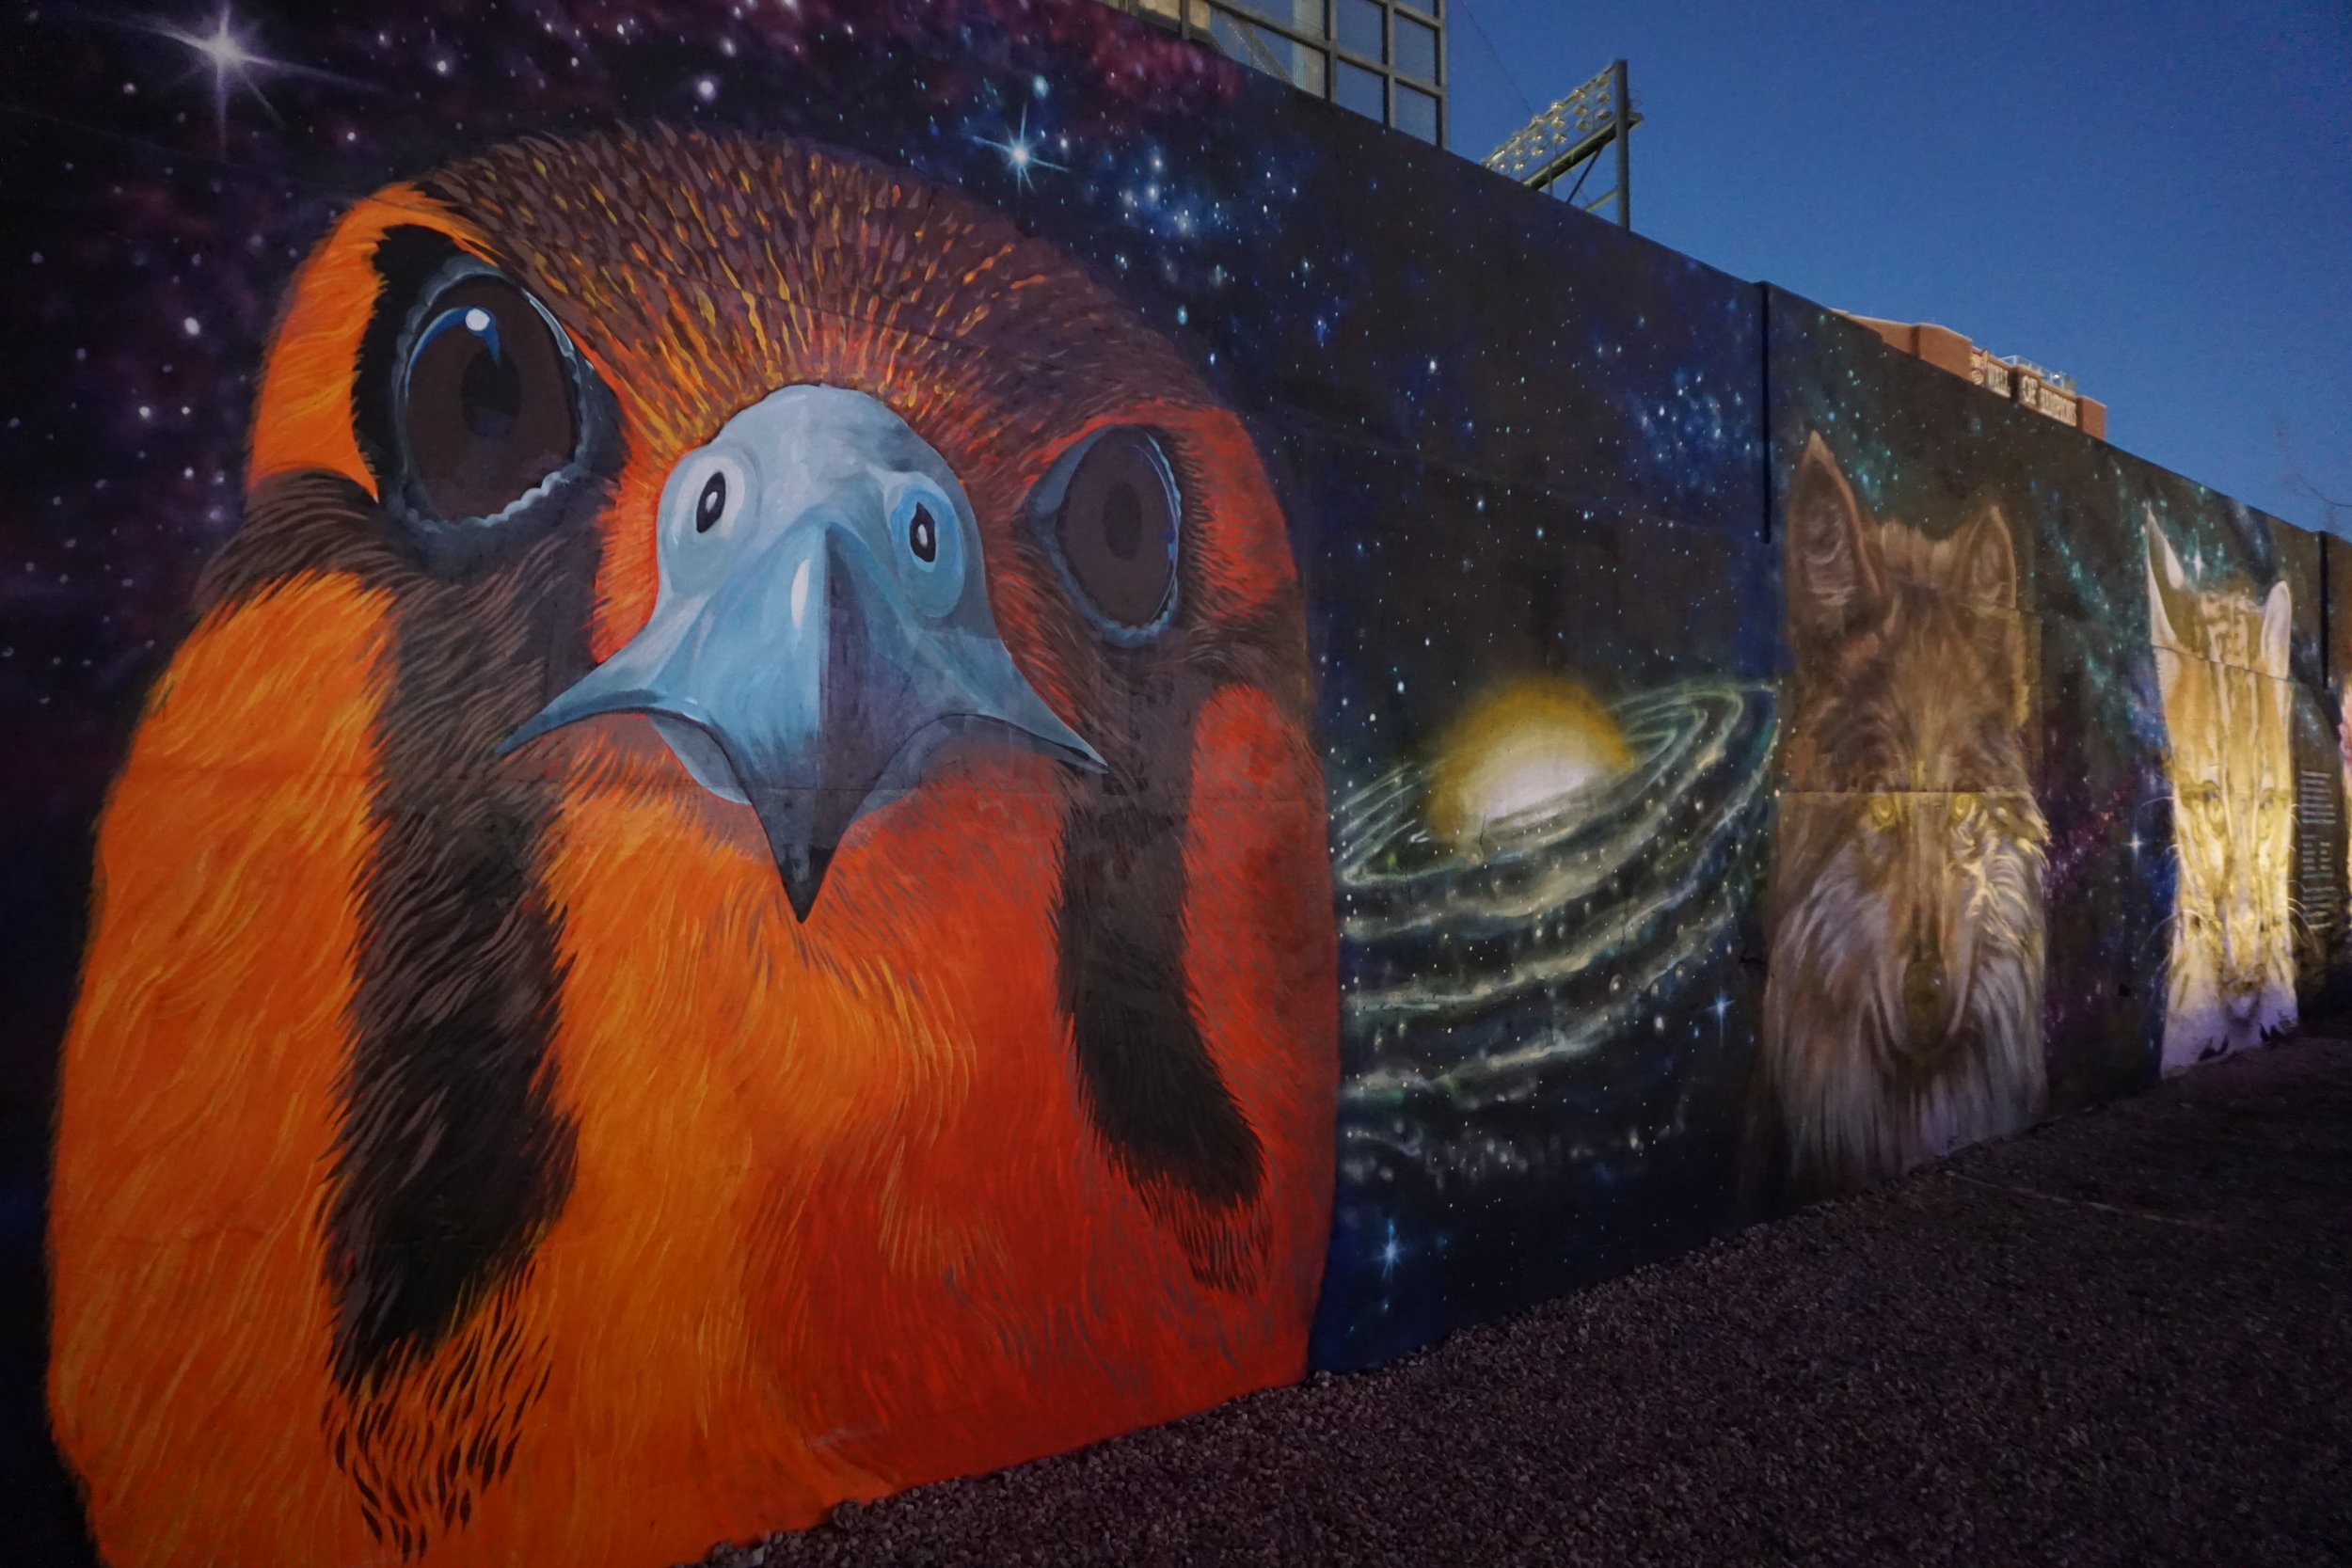 Street art of an orange bird and other animals